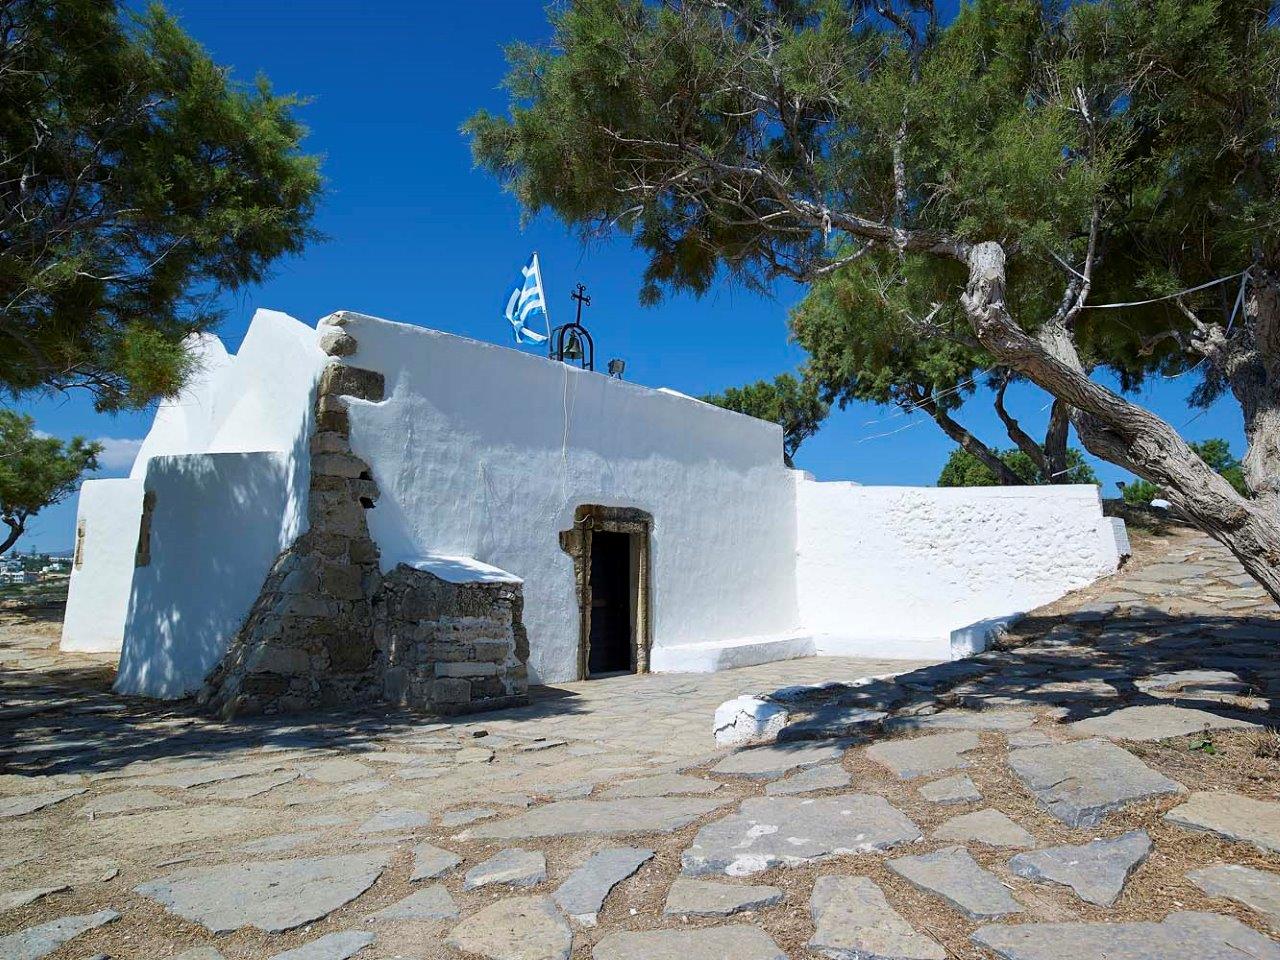 Book your wedding day in Aldemar Knossos Royal Crete